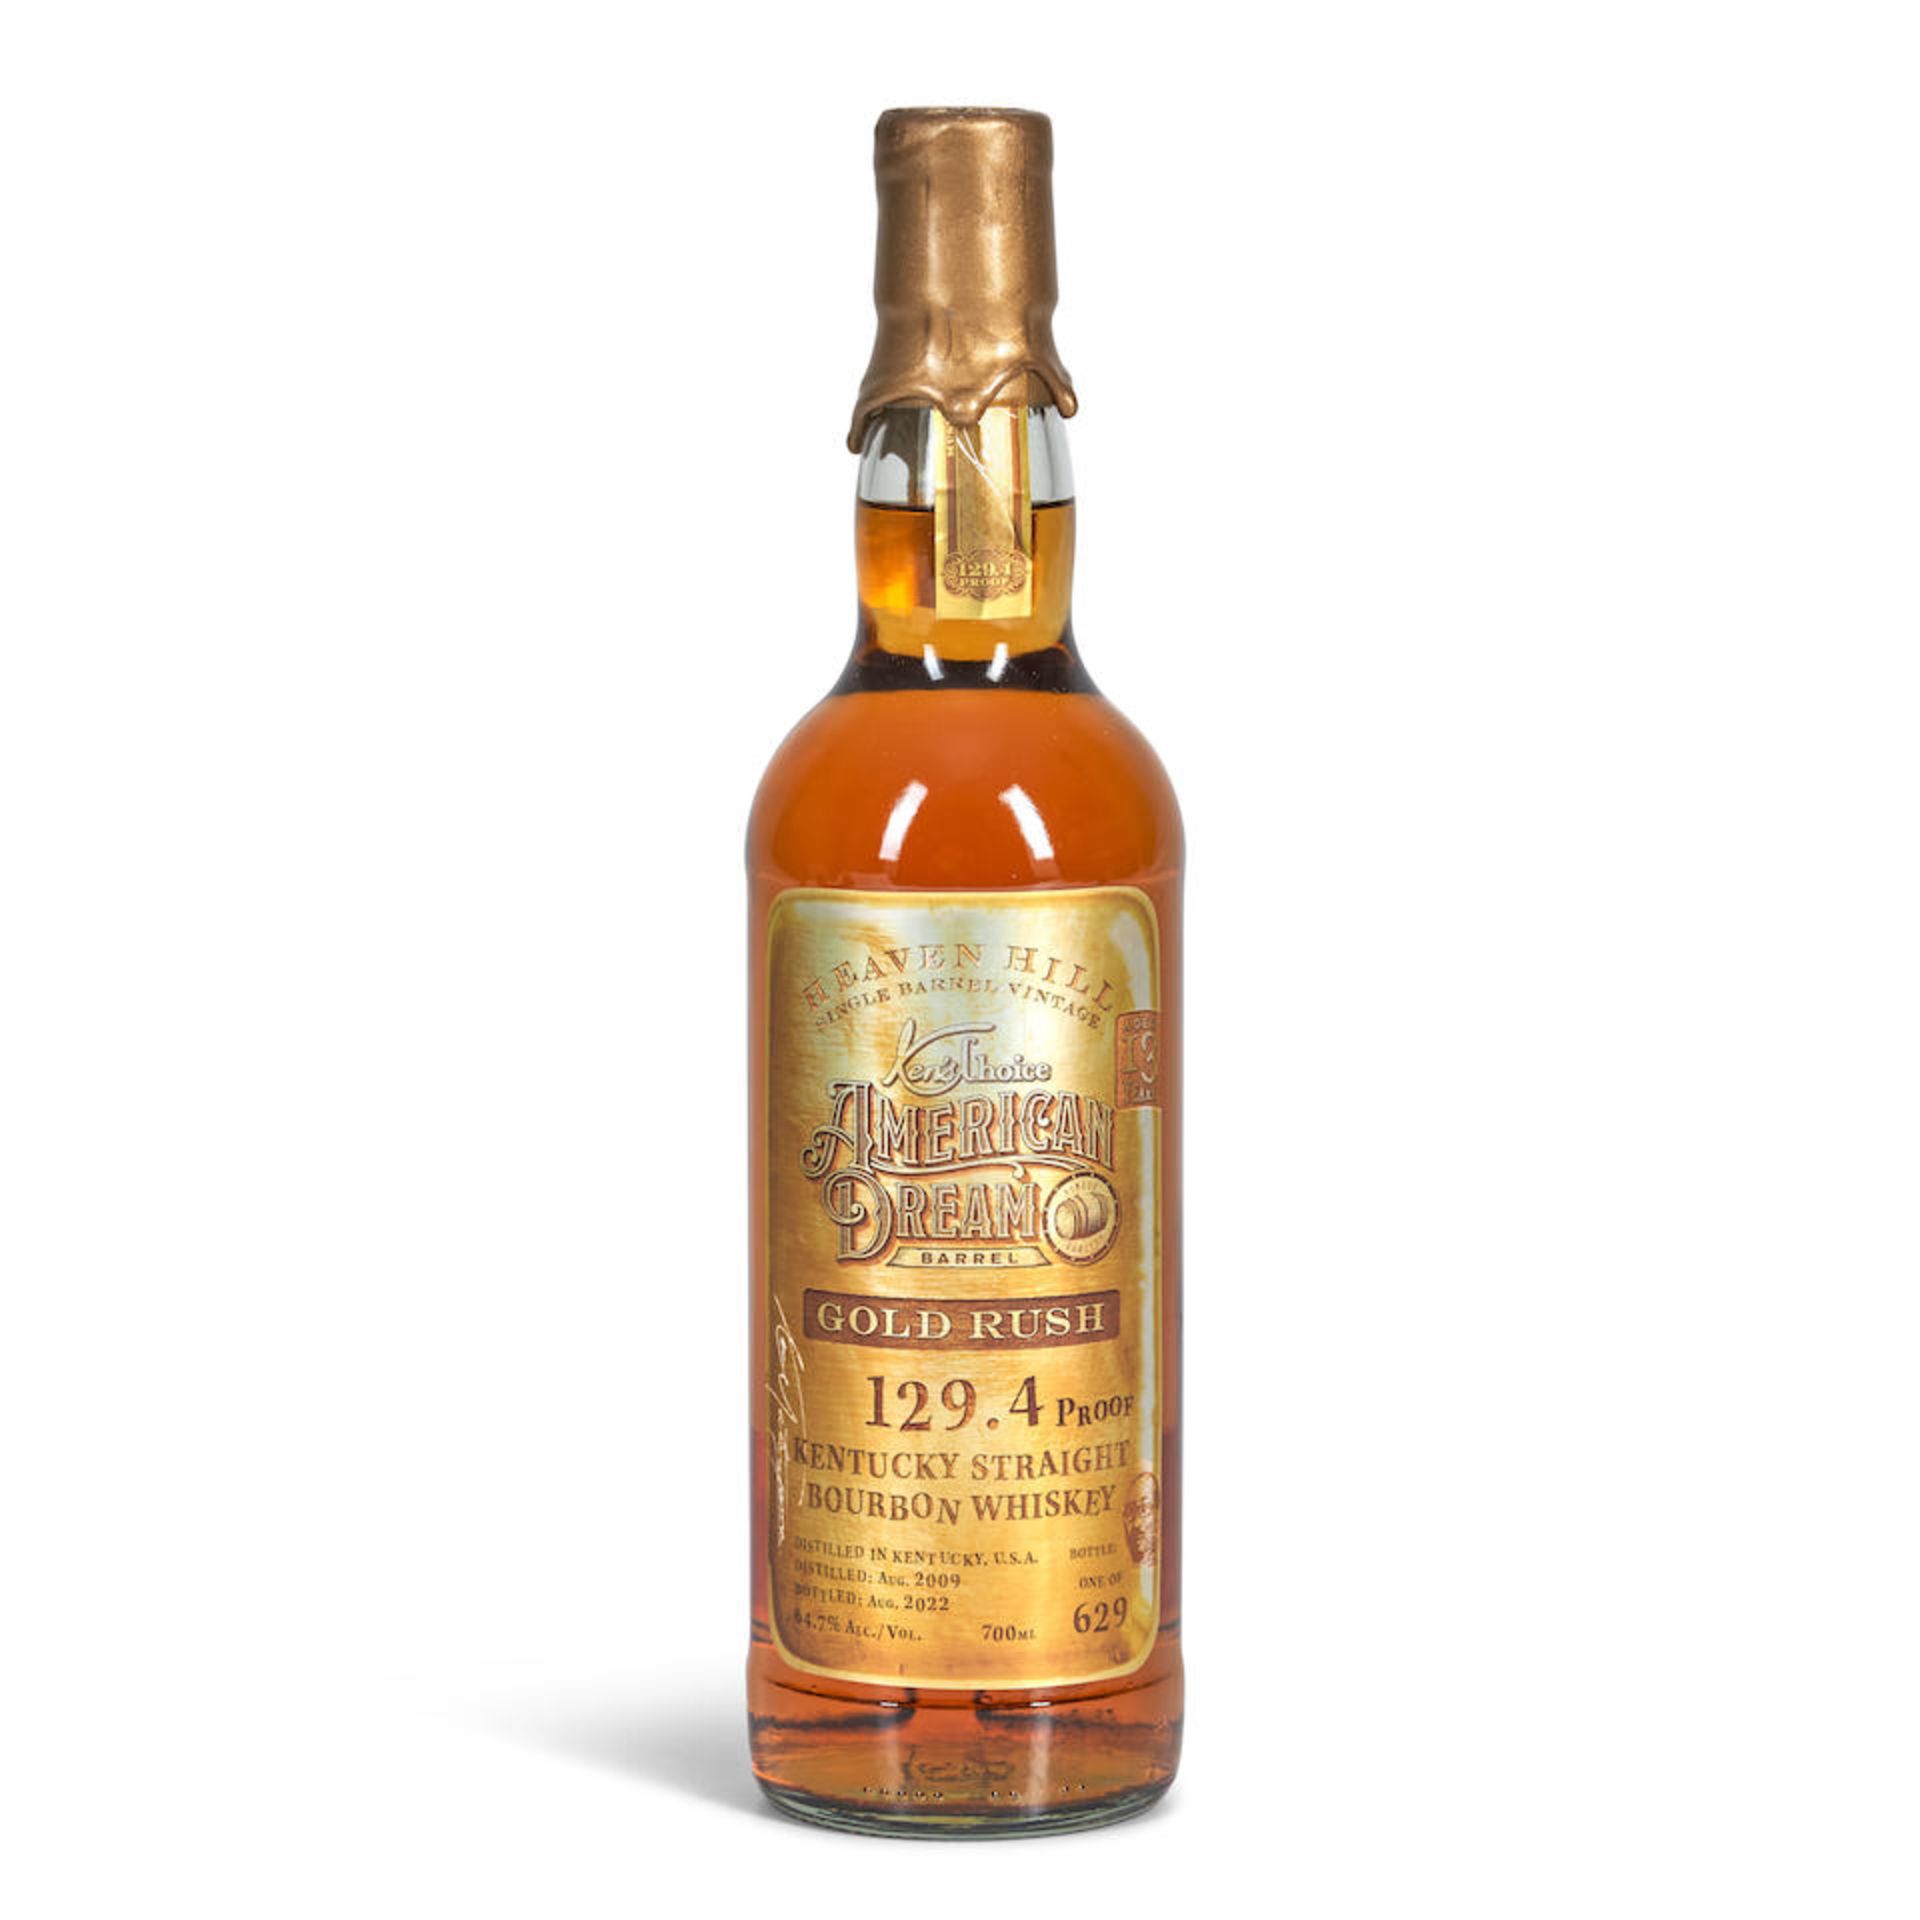 Ken's Choice 13 Years Old Bourbon 'Gold Rush' (Heaven Hill, 1 750ml bottle)